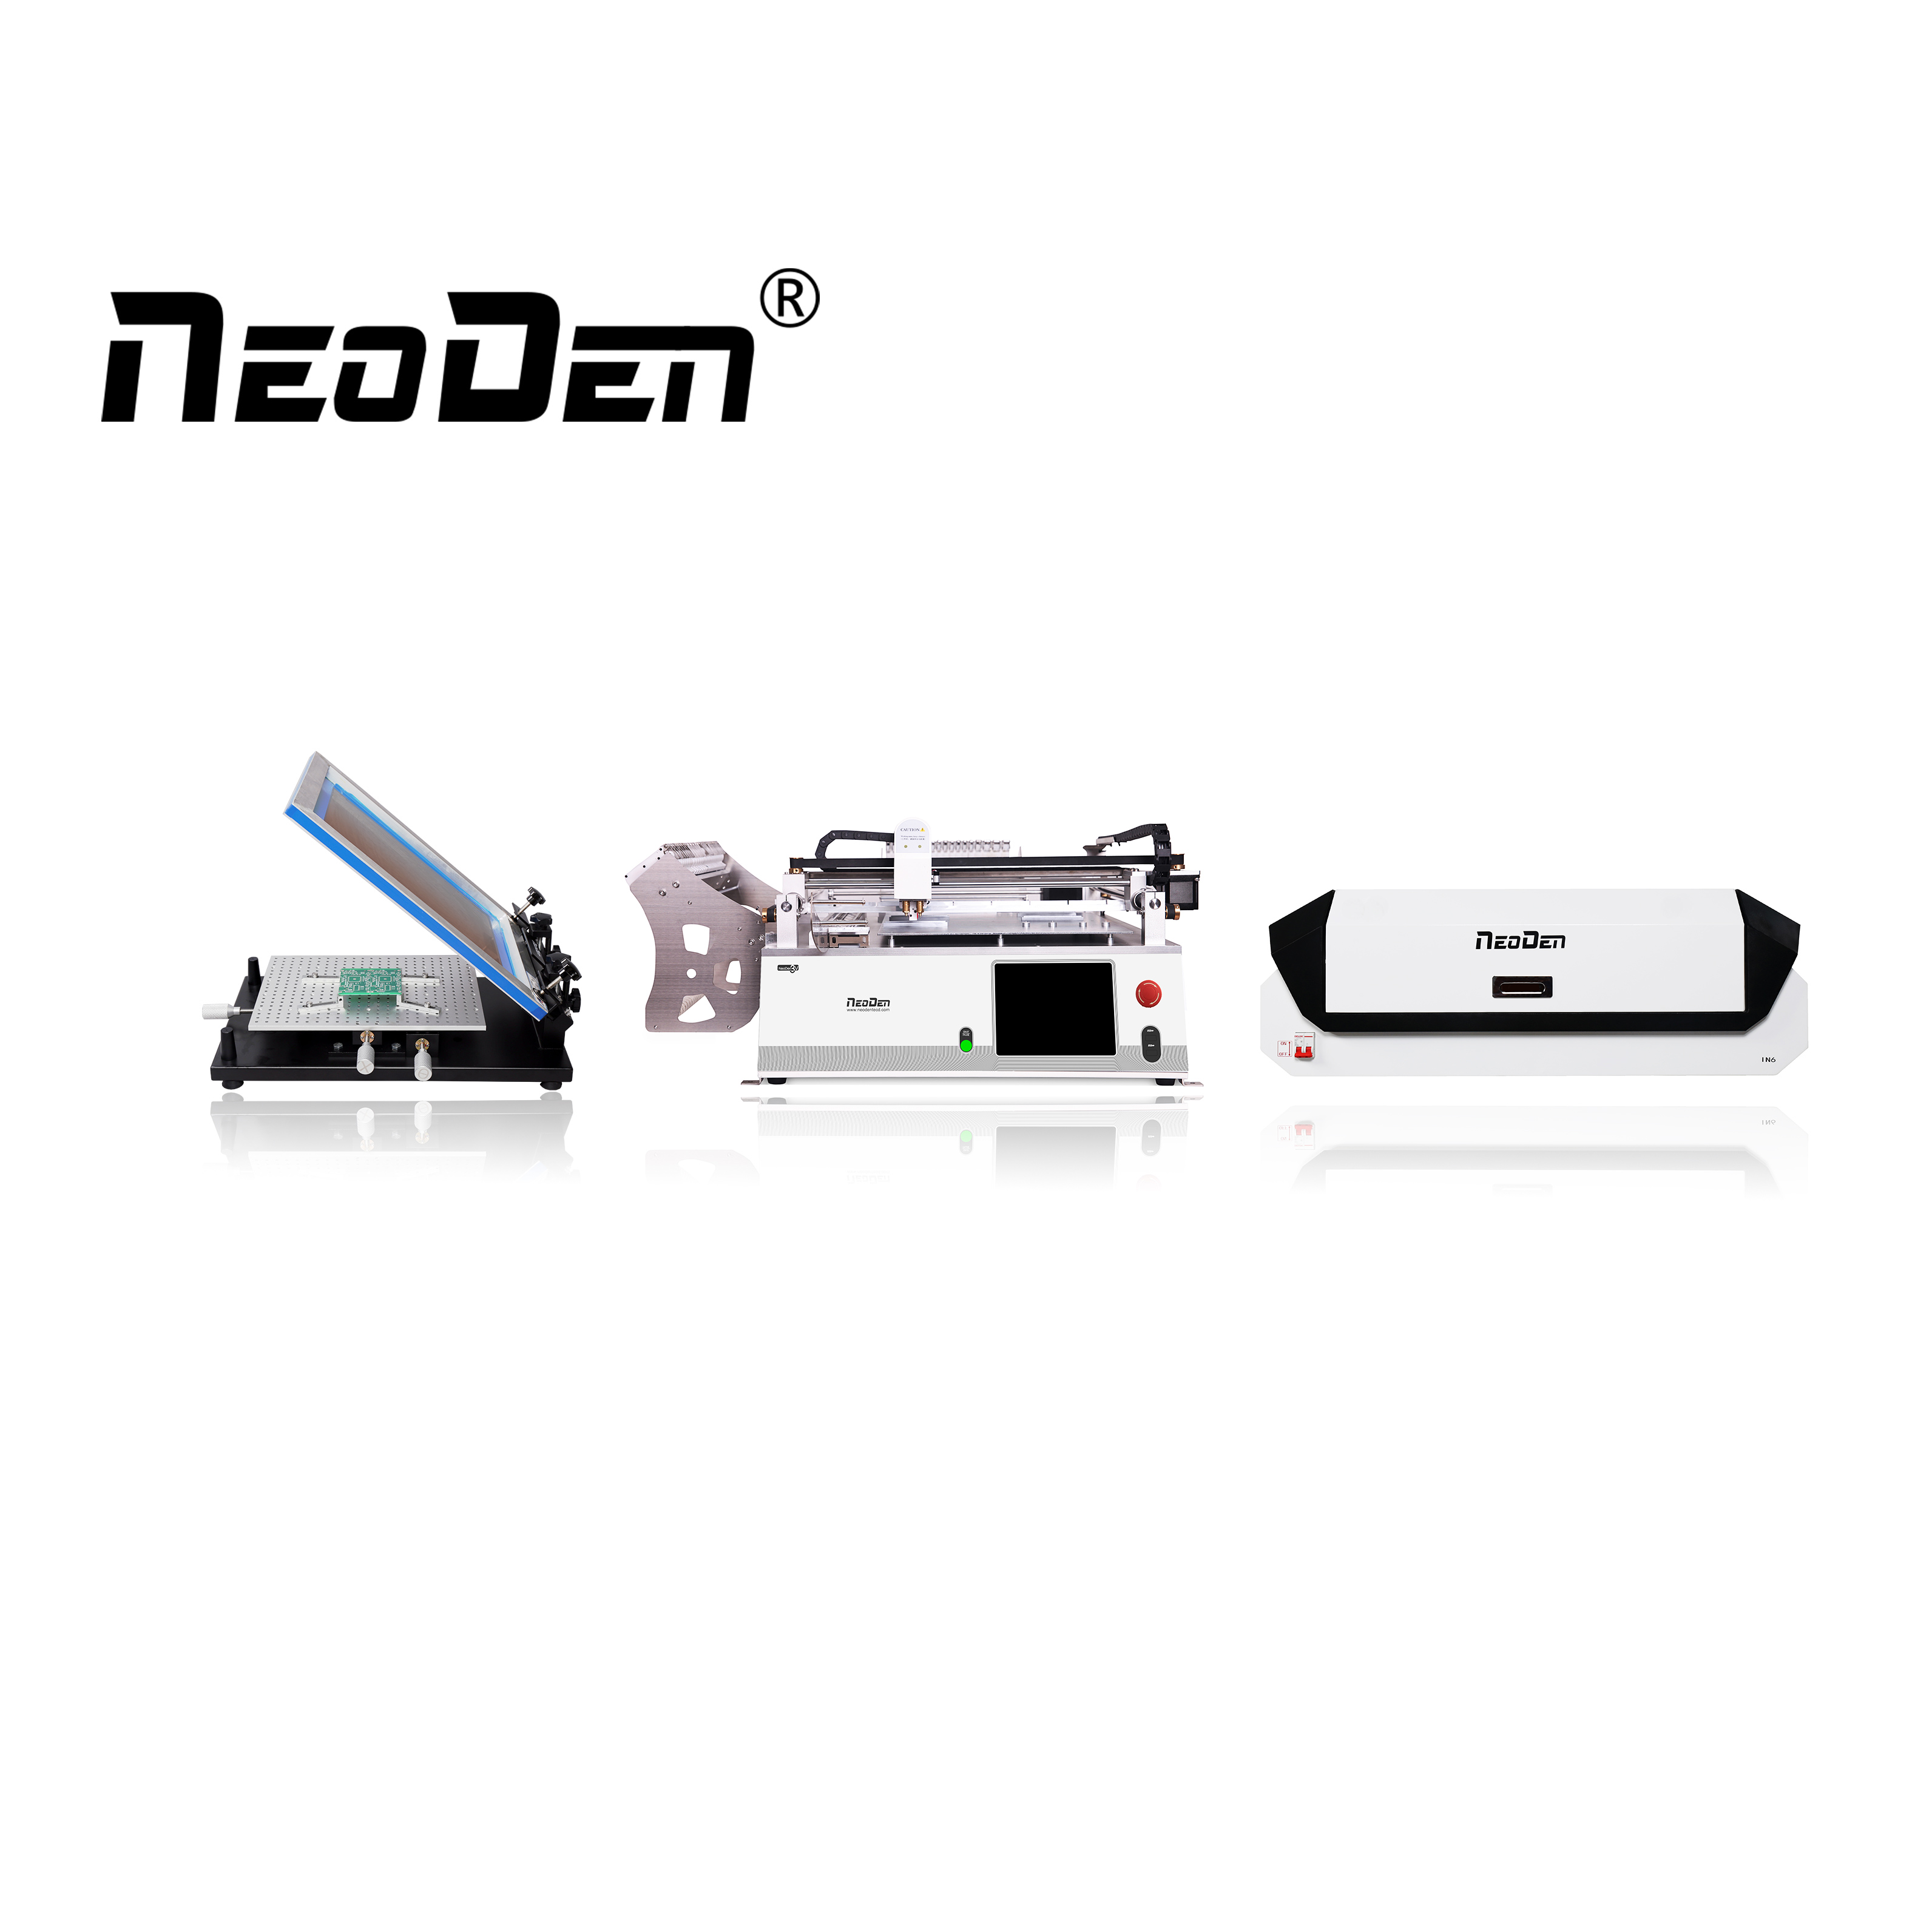 NeoDen parva productio budget linea ad satus-ups